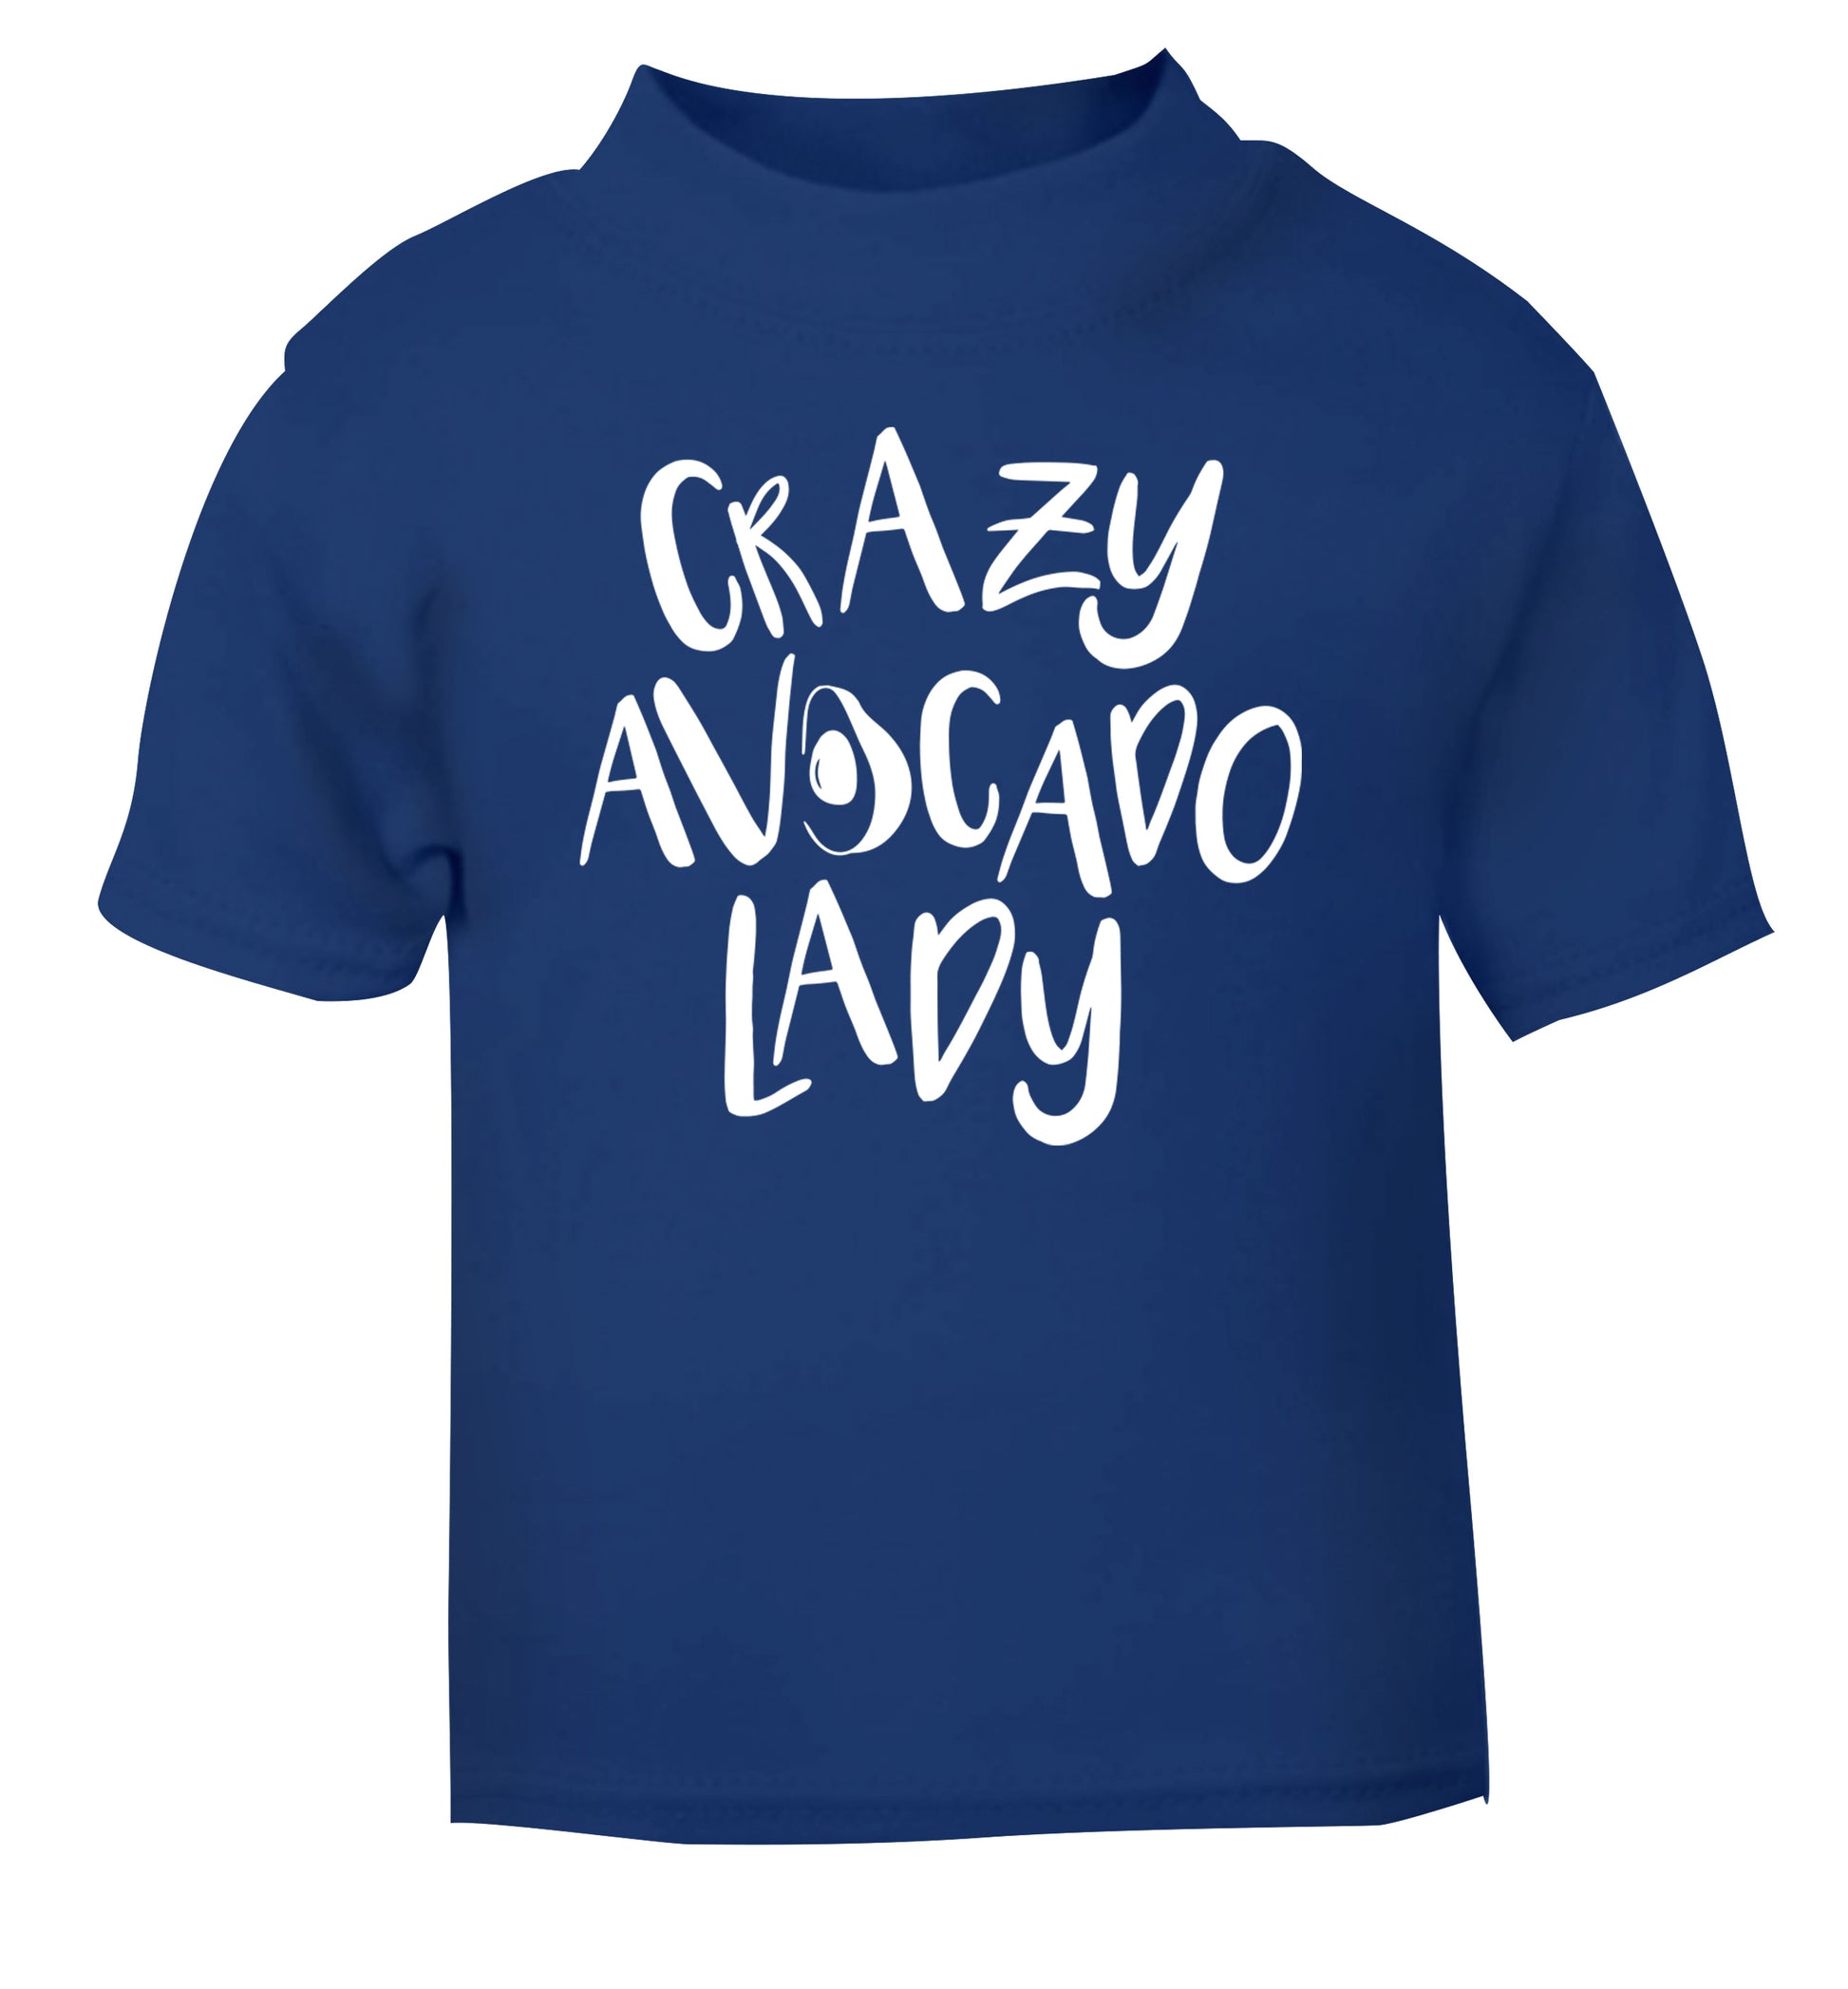 Crazy avocado lady blue Baby Toddler Tshirt 2 Years